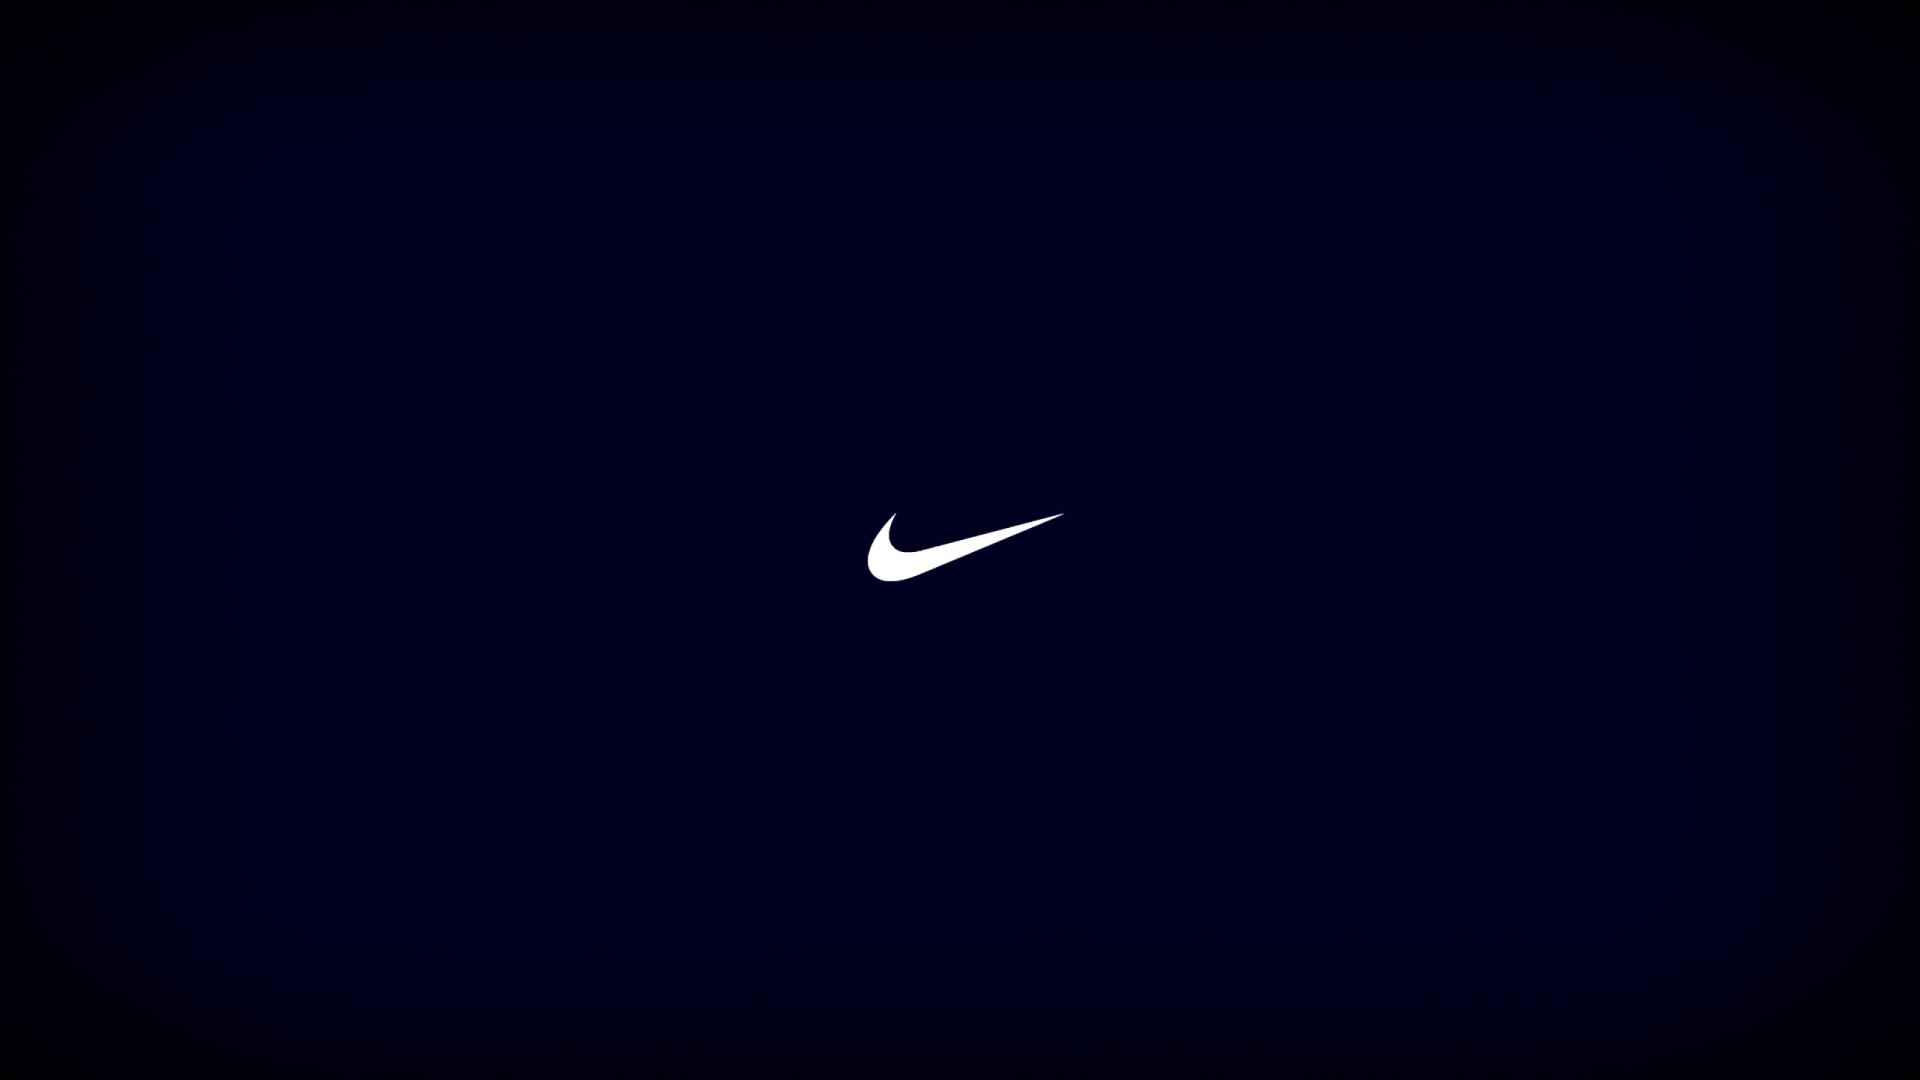 Nike Logo On The Blue Background Wallpaper Des 6930 Wallpaper High